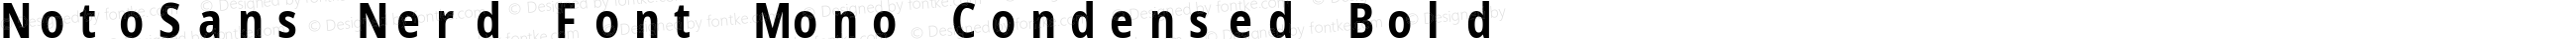 Noto Sans Condensed Bold Nerd Font Complete Mono